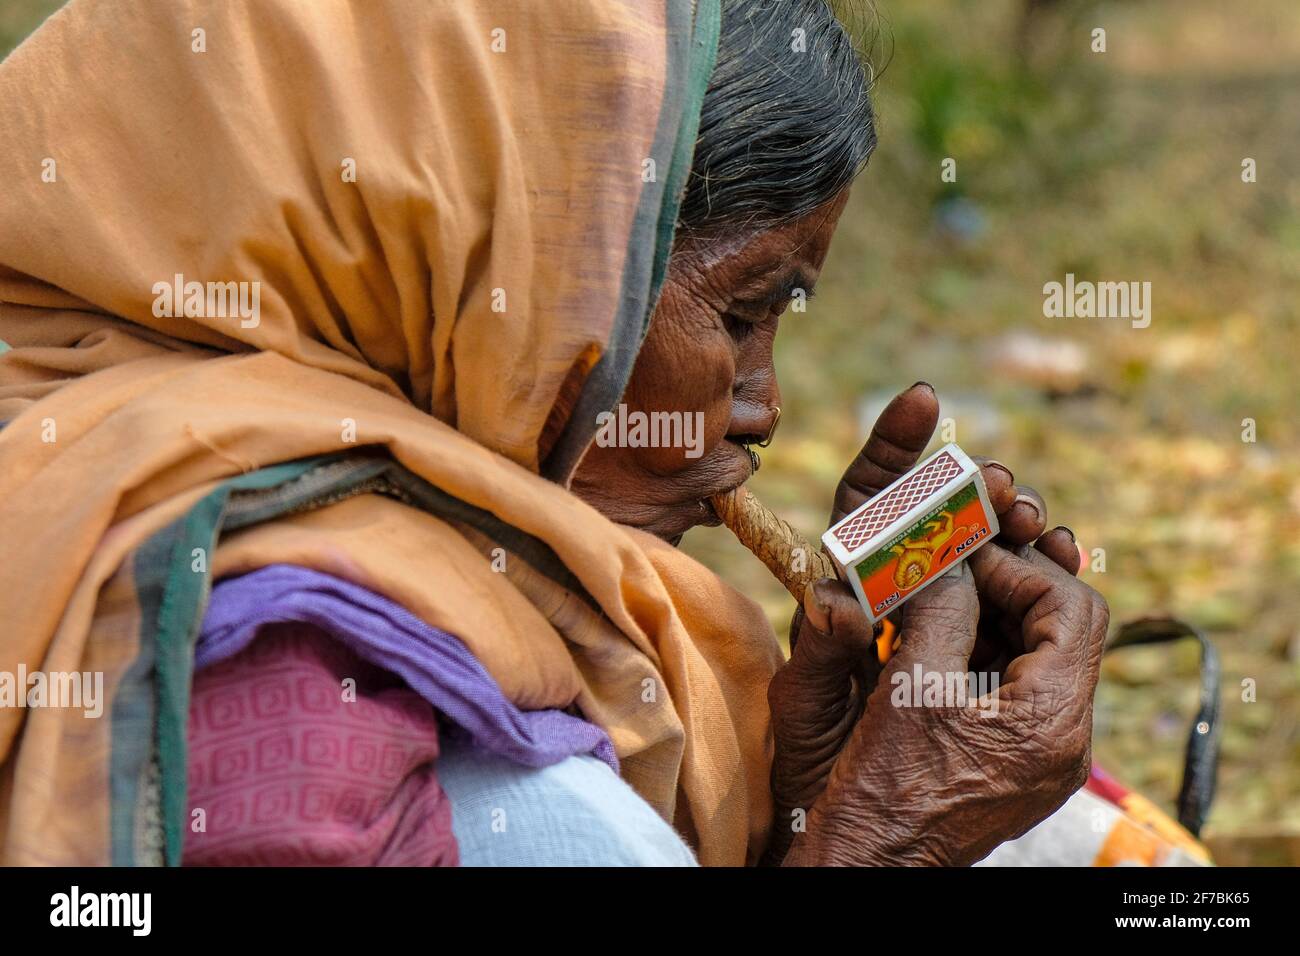 Chatikona, India - February 2021: An Adivasi woman from the Desia Kondh tribe smoking in the Chatikona market on February 17, 2021 in Odisha, India. Stock Photo